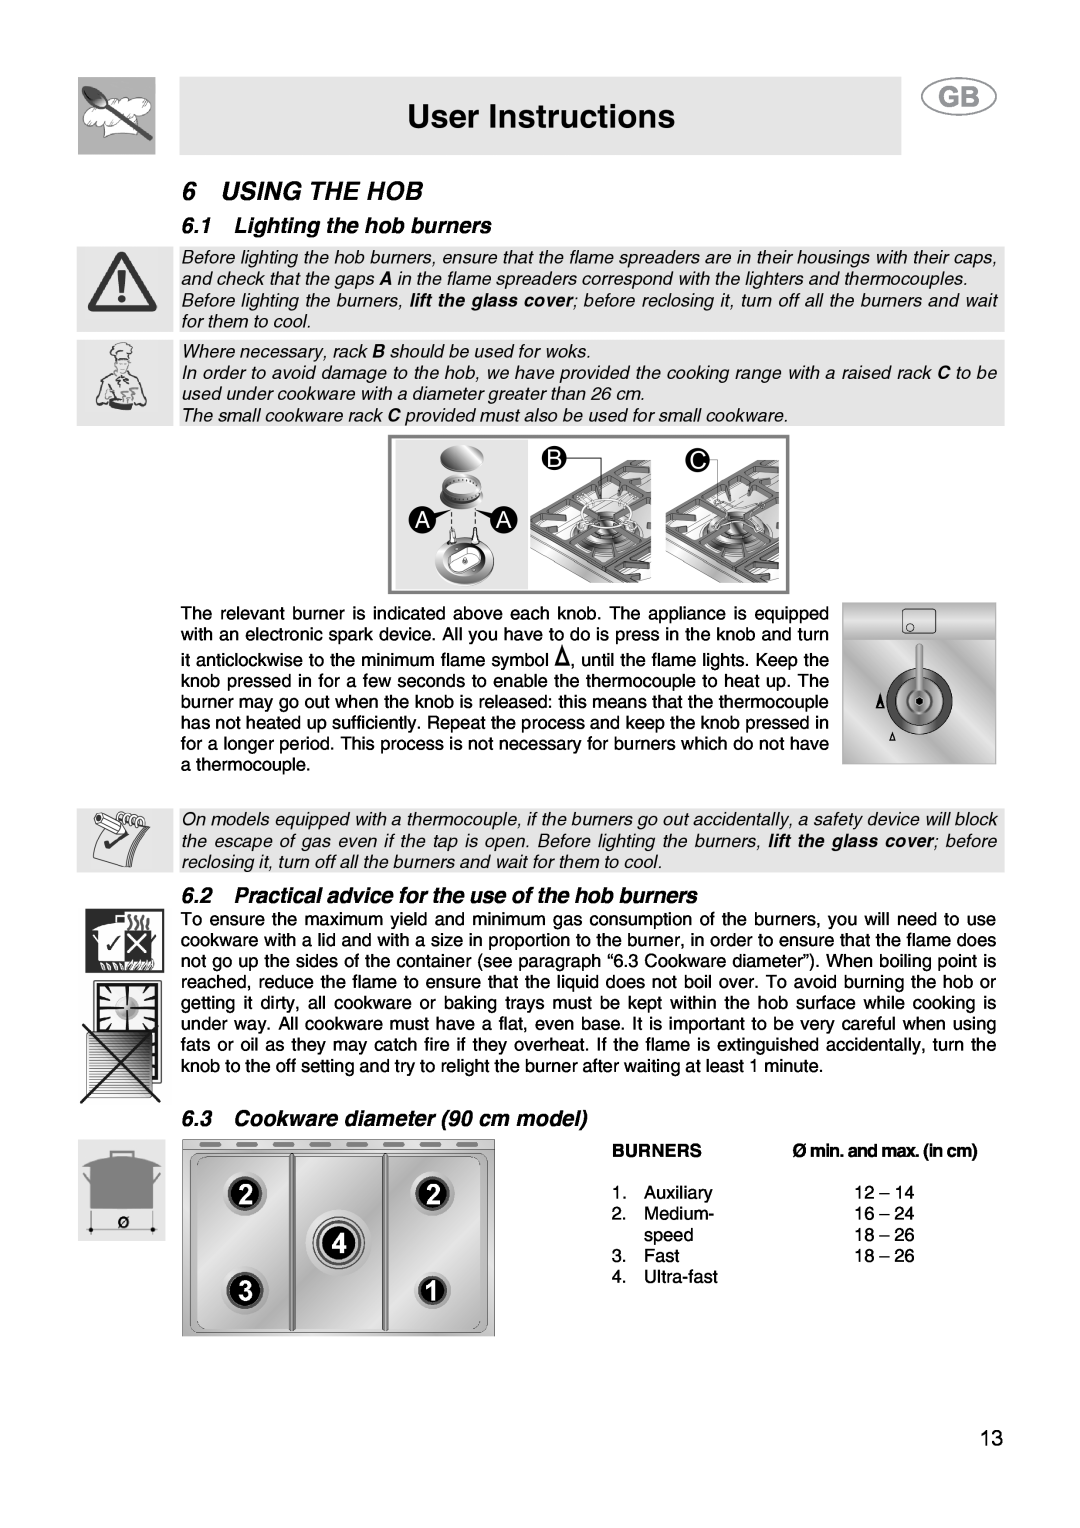 Smeg CS15-5 manual Using The Hob, 6.1Lighting the hob burners, 6.3Cookware diameter 90 cm model, User Instructions 